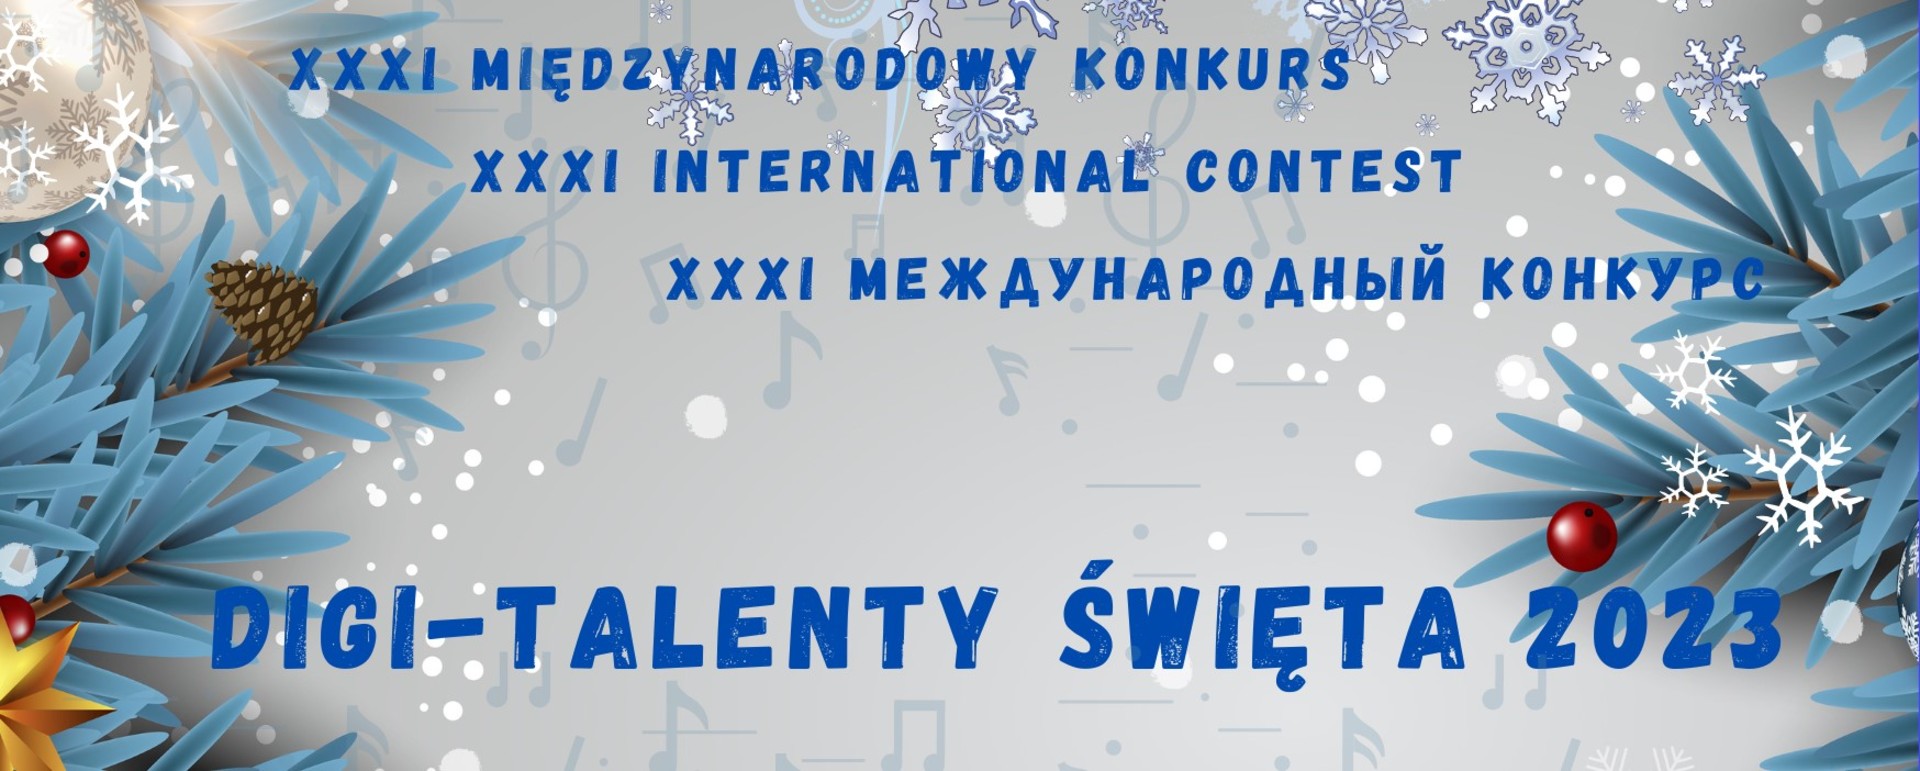 logo Digi Talenty Święta2023.jpg